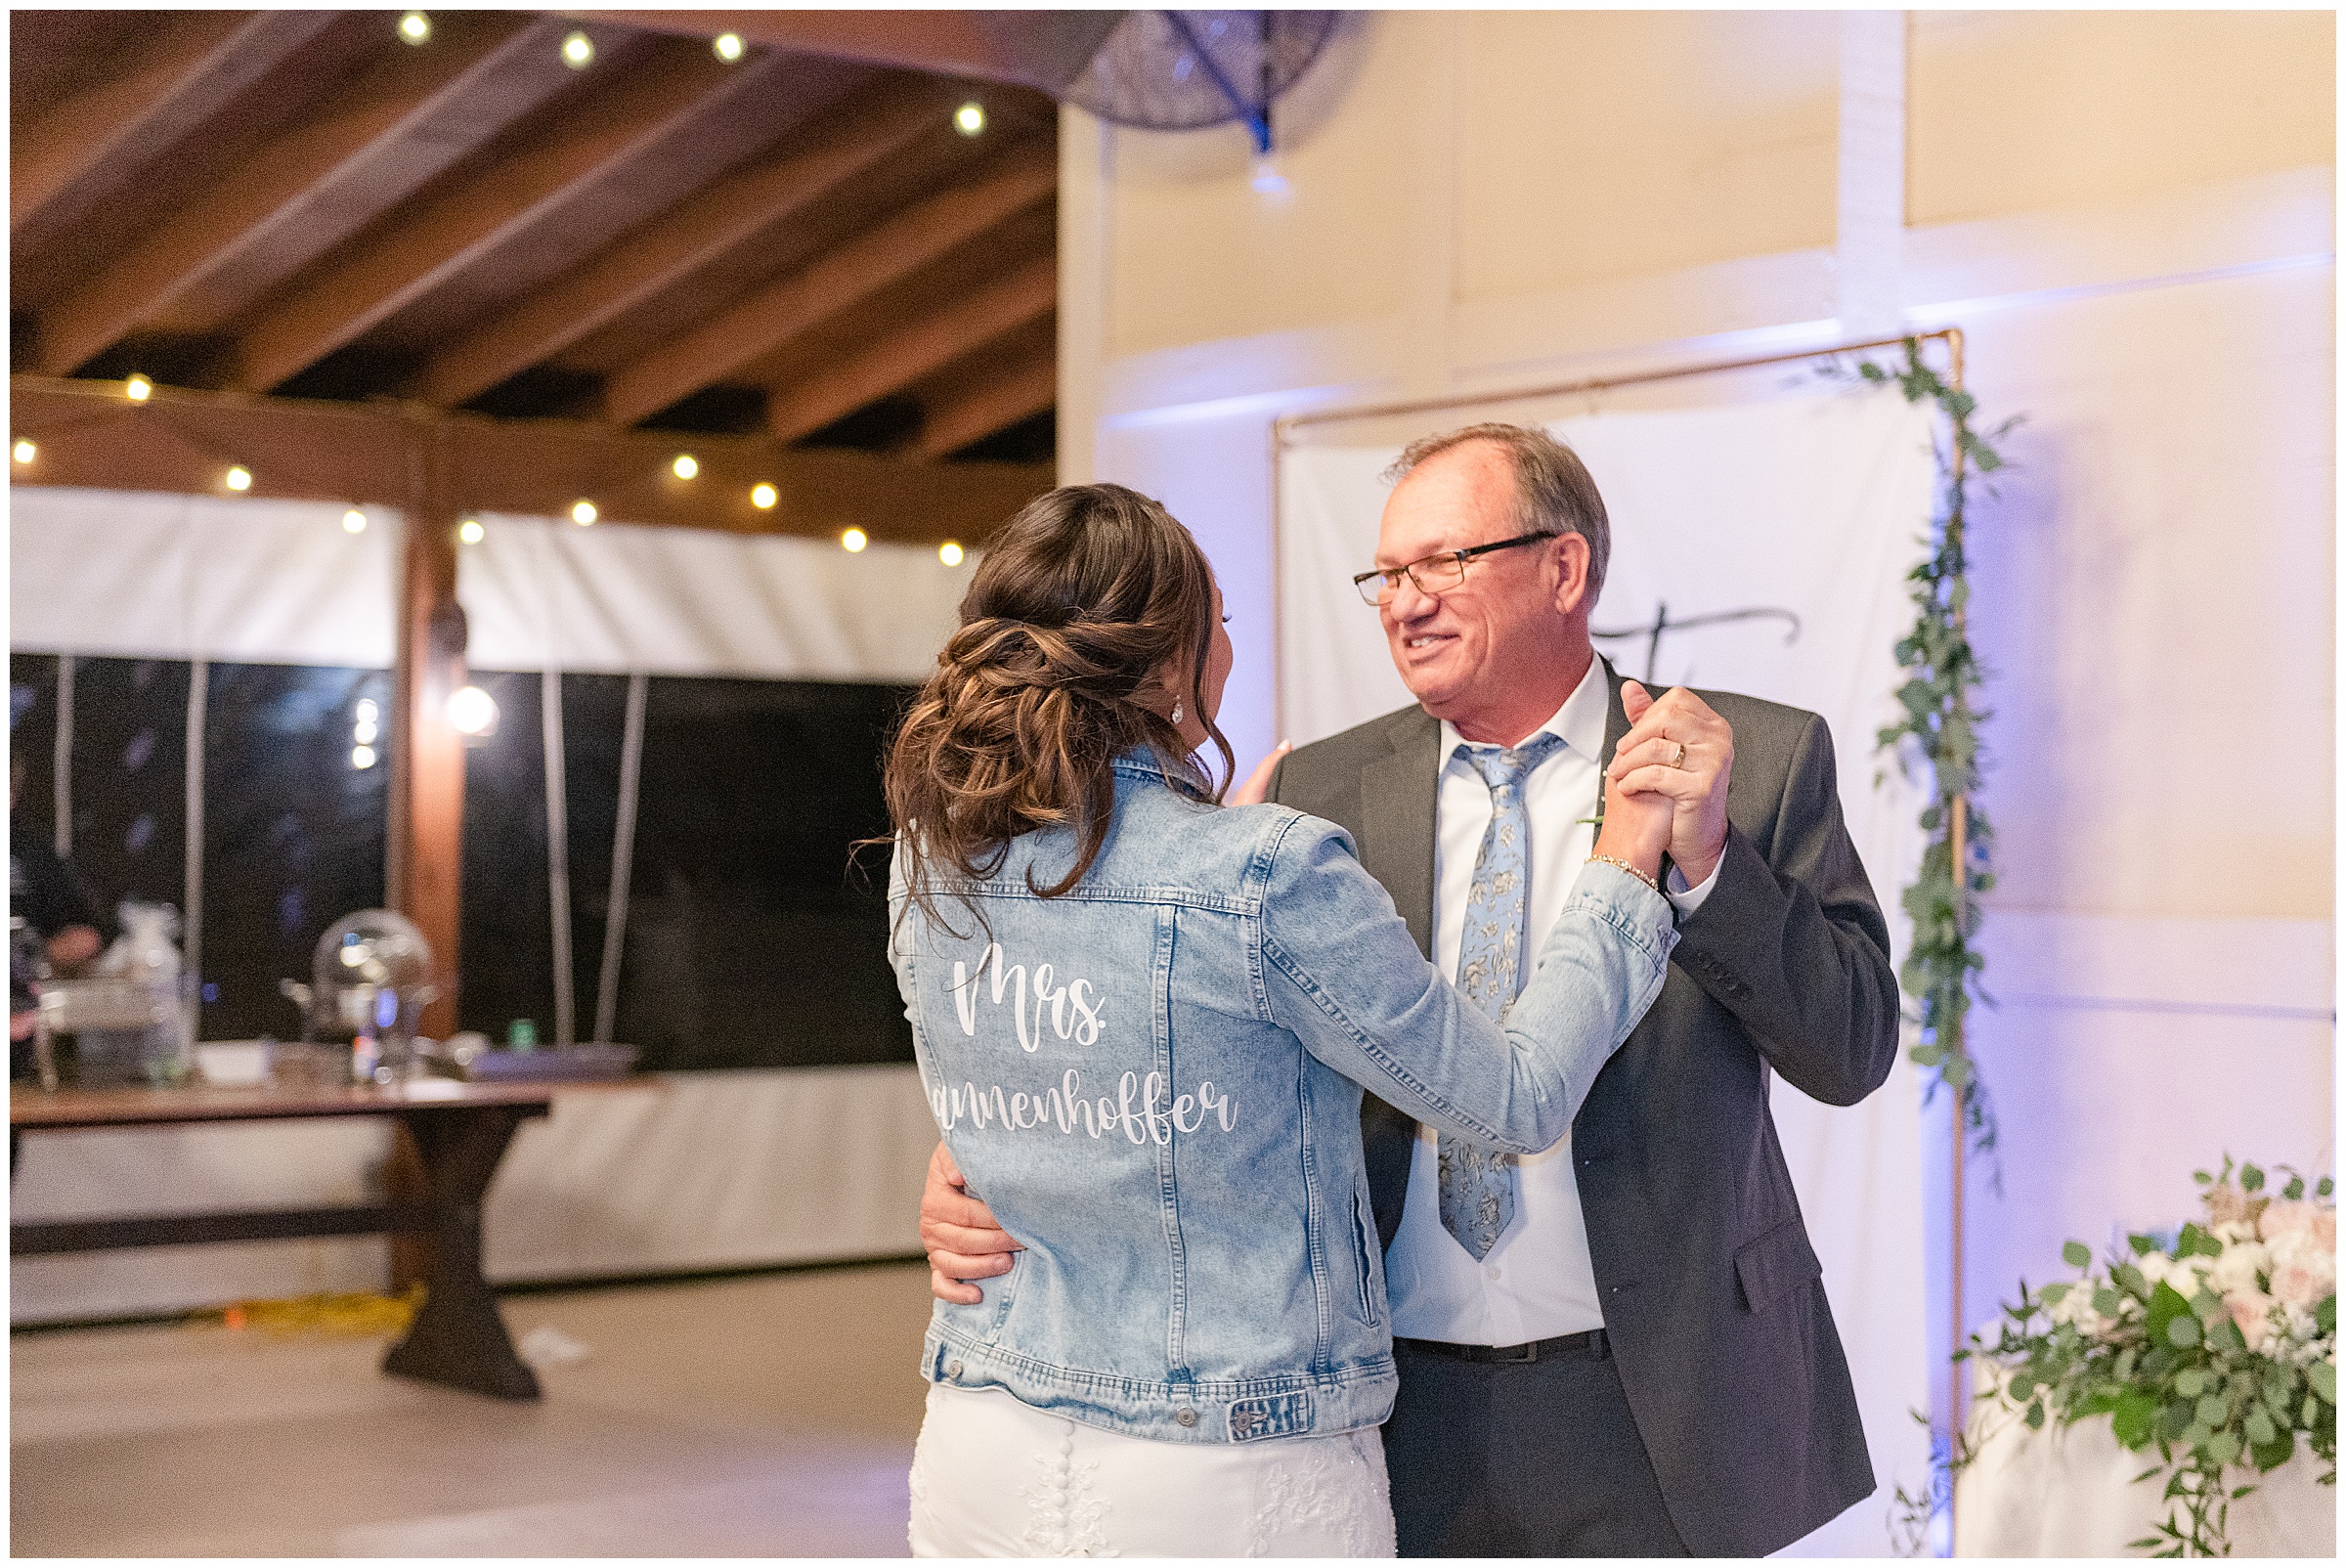 Father daughter dance | Magnolia Manor Wedding in Vero Beach